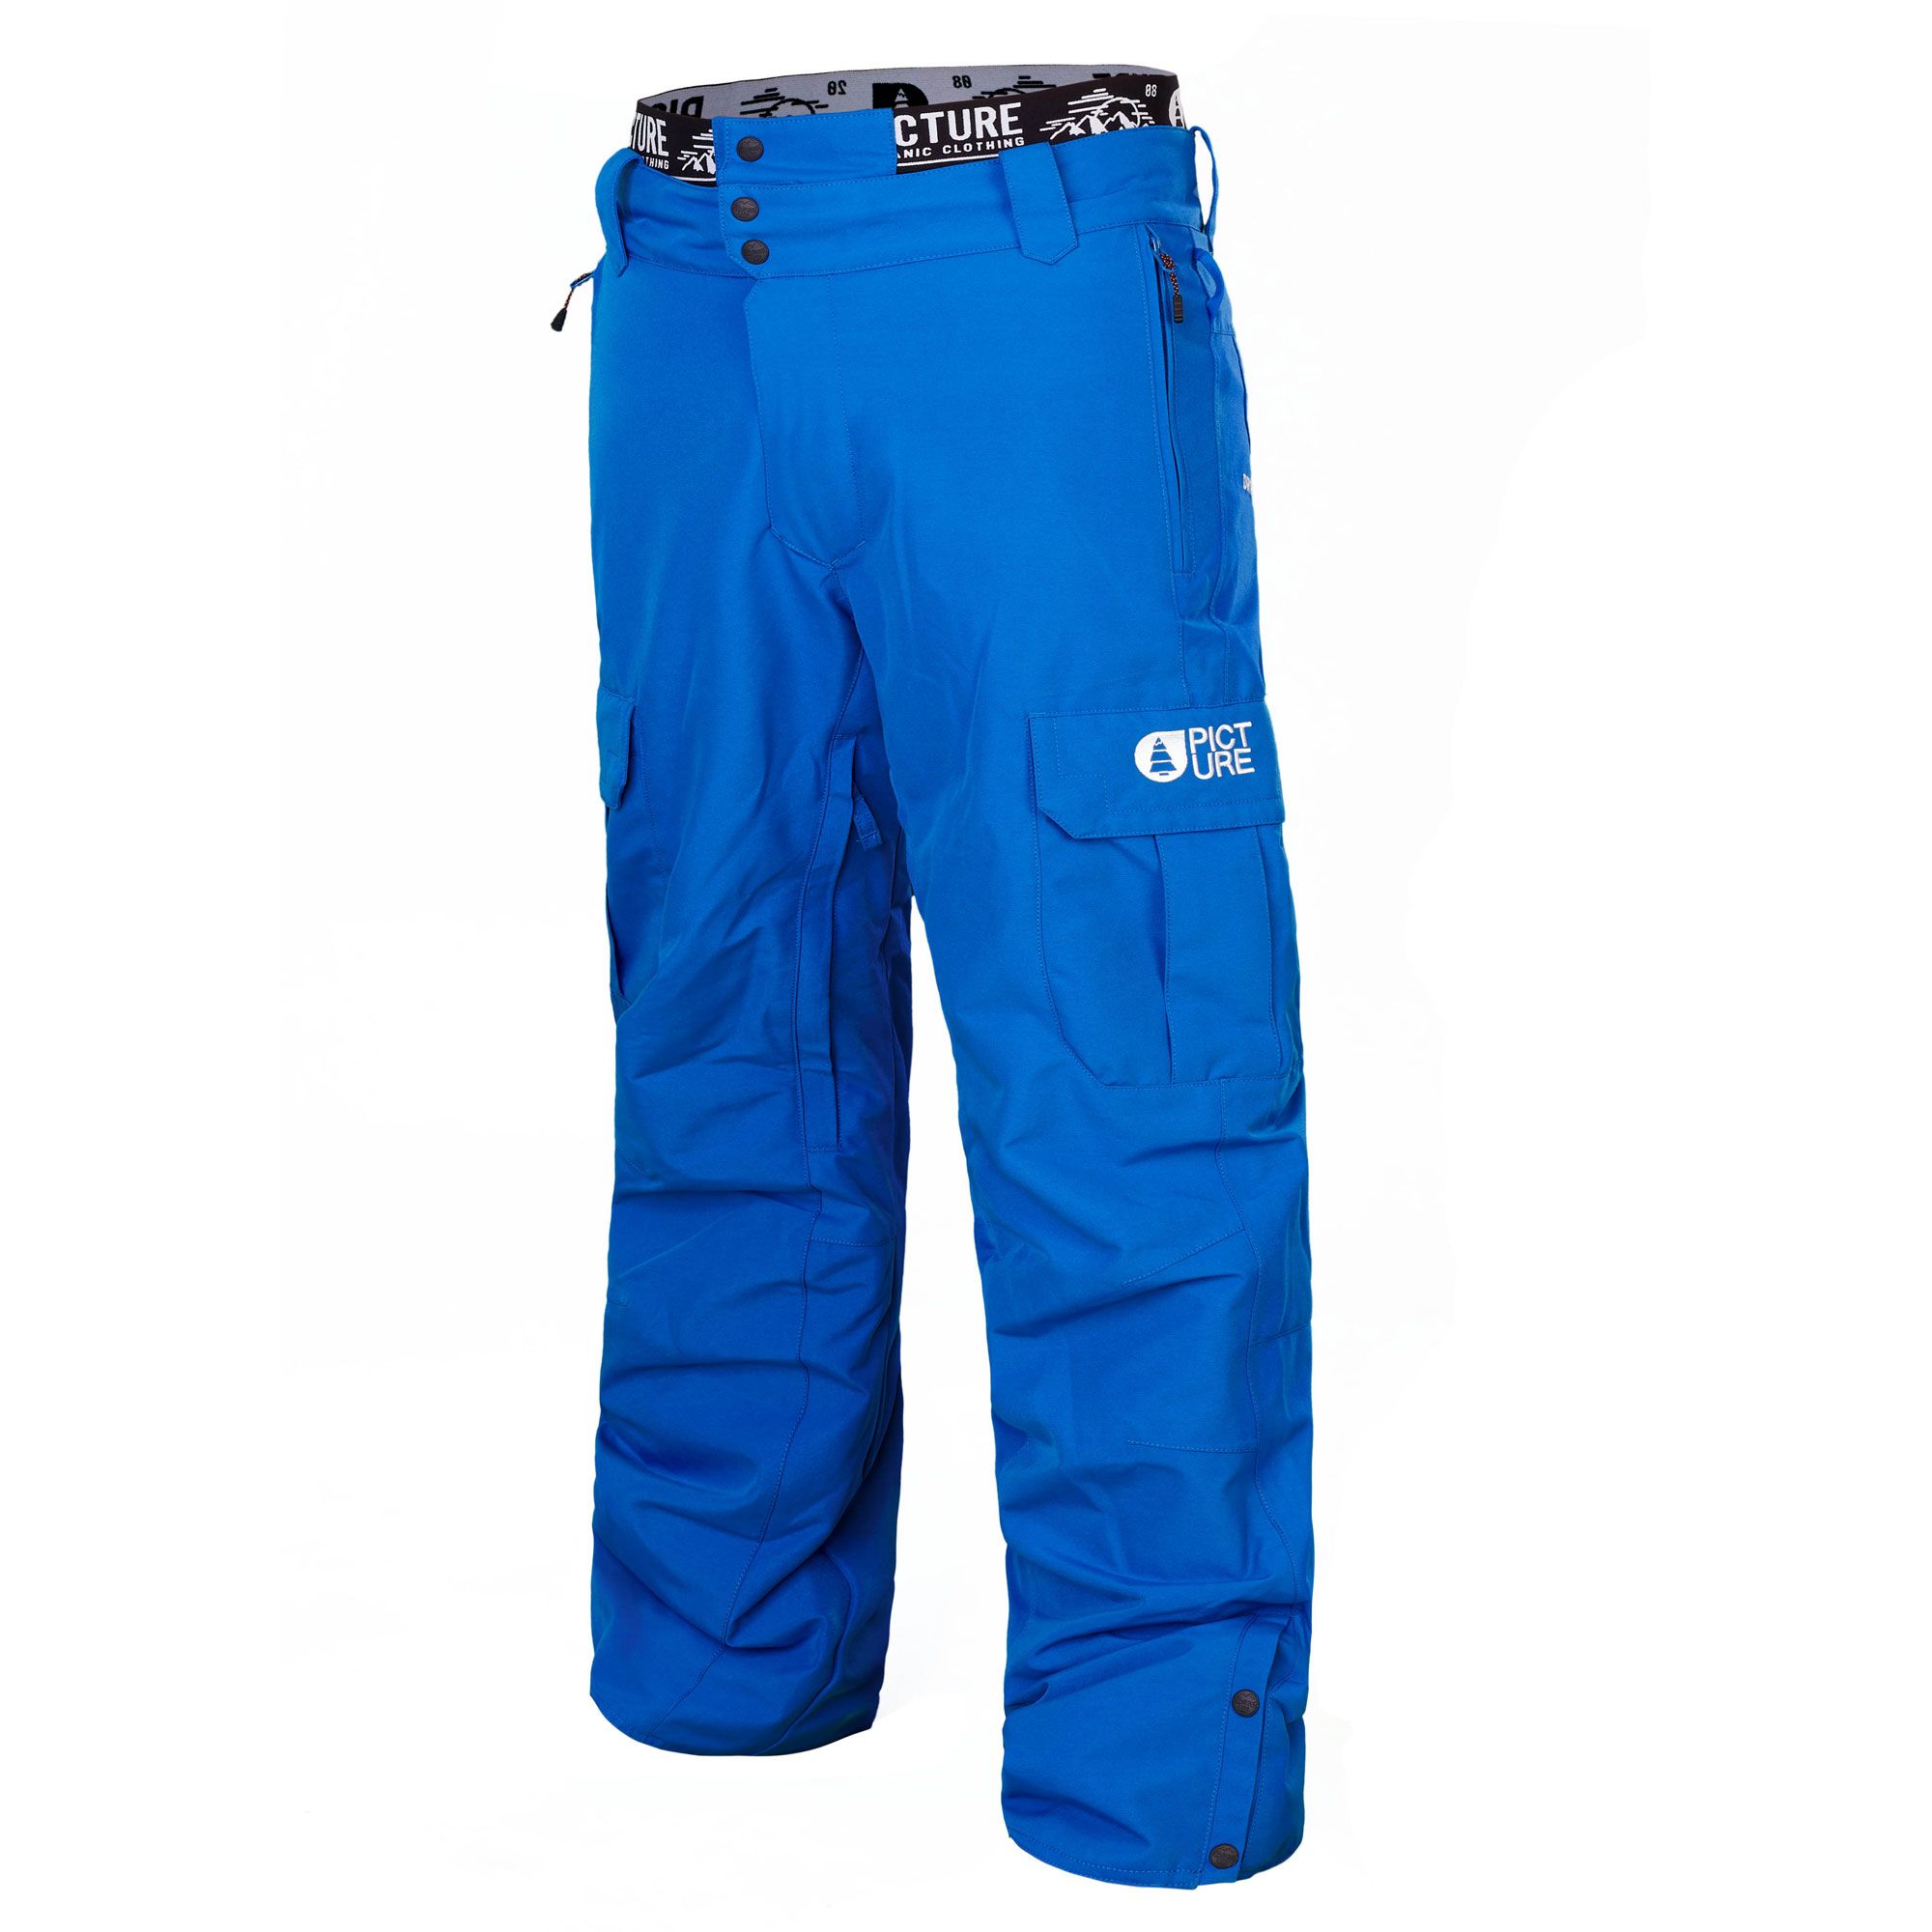 Pantalon de Ski Panel Pant - Picture Blue